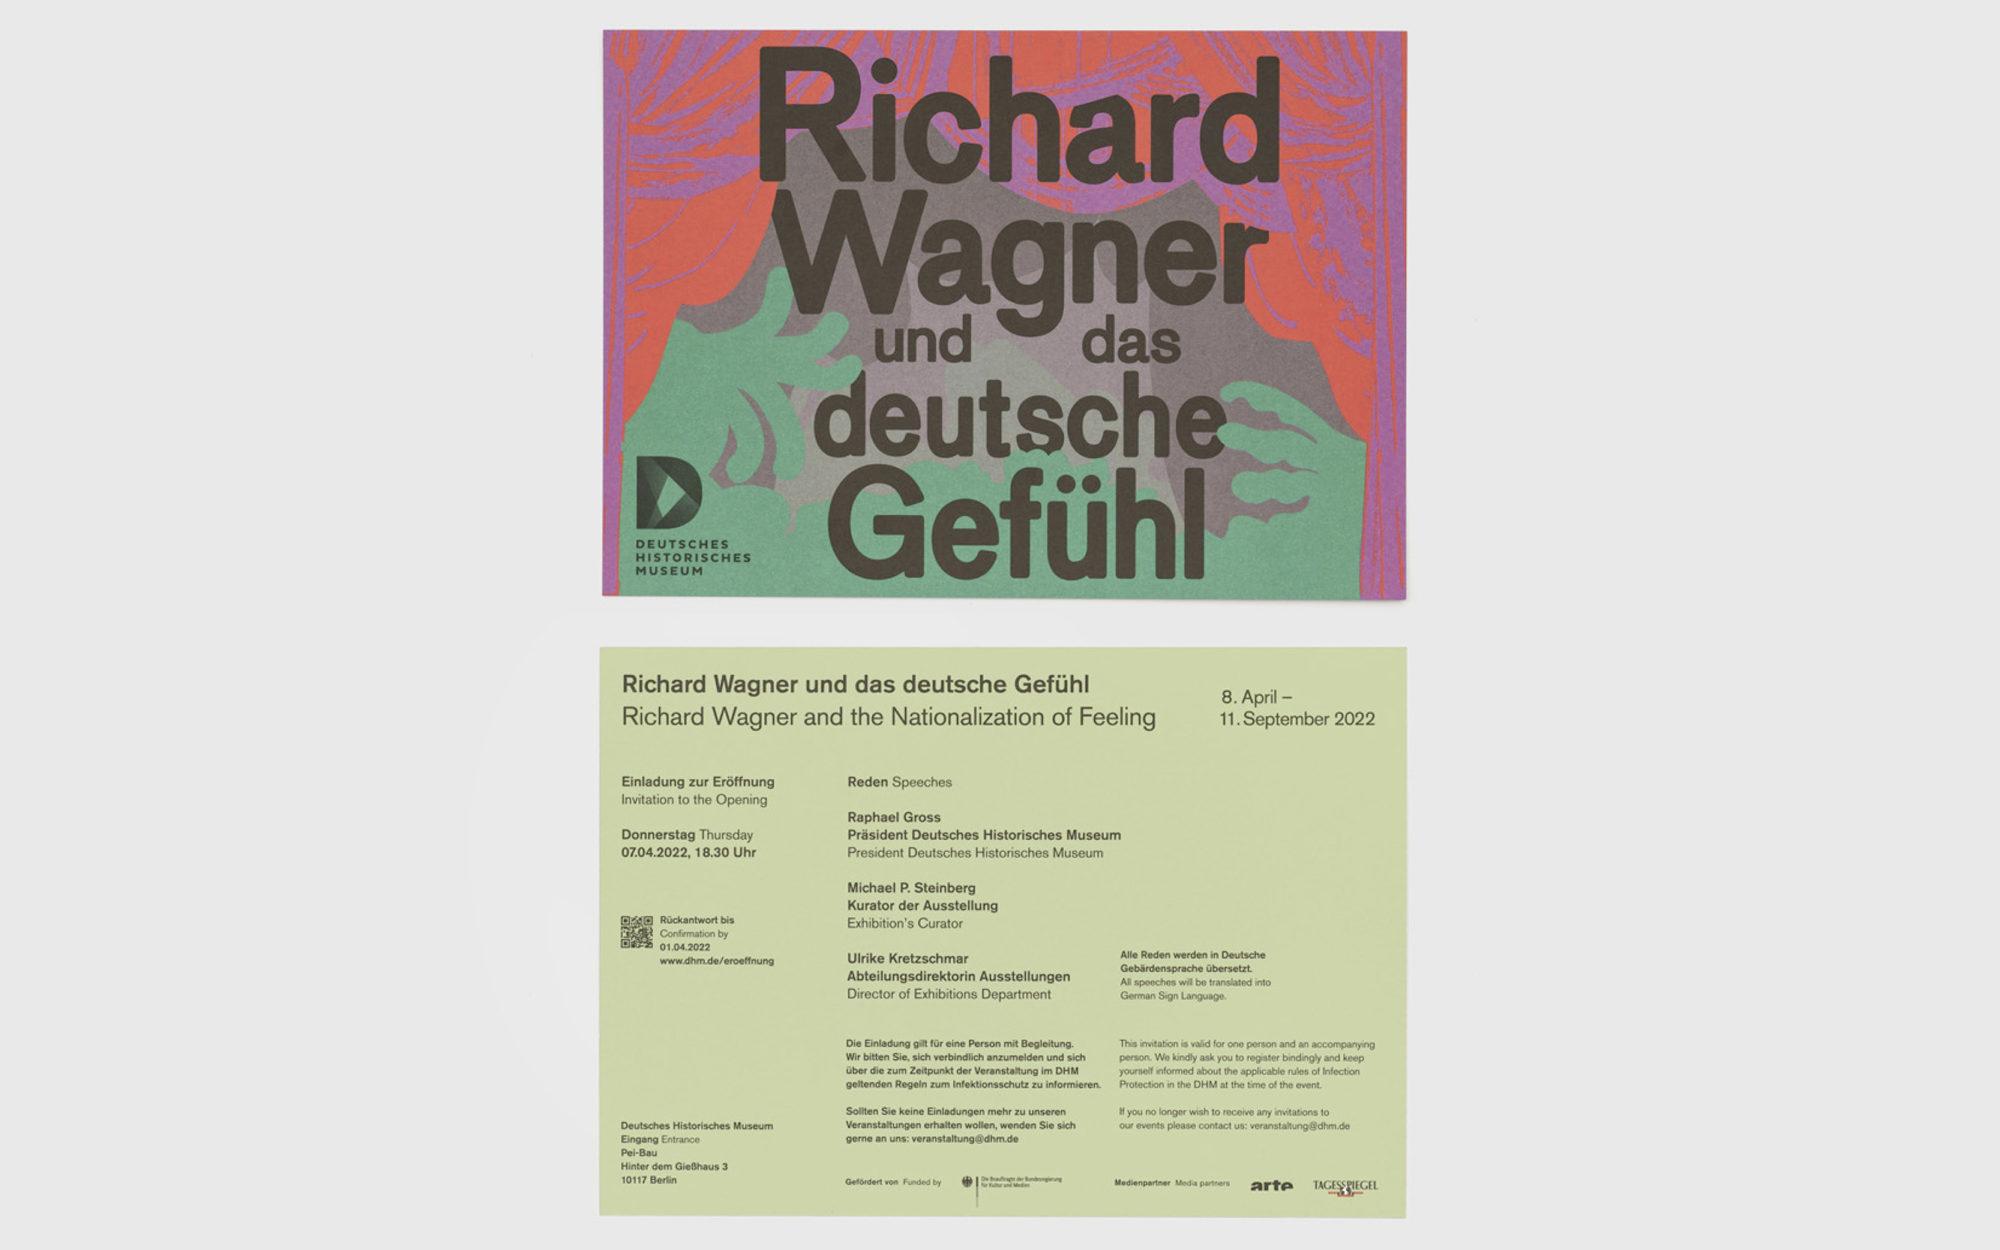 Richard Wagner invitation